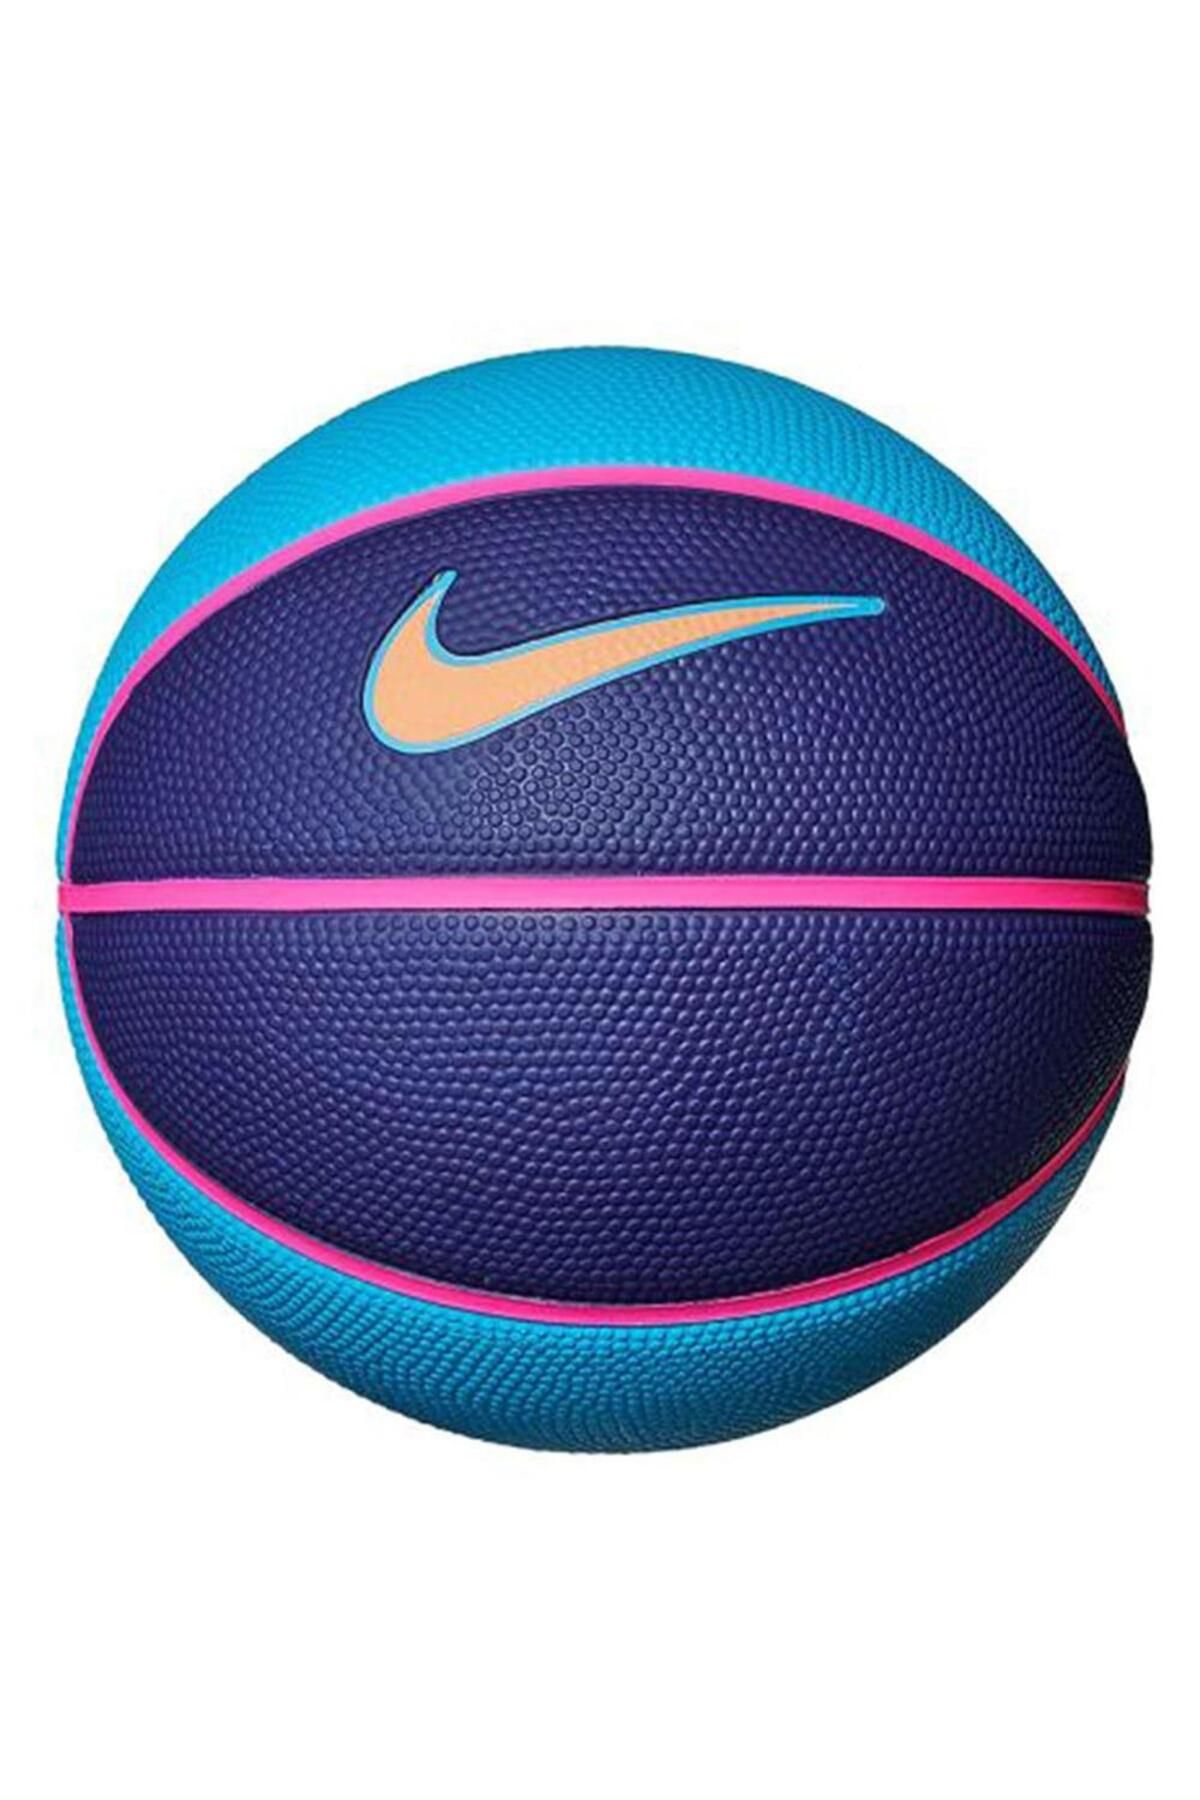 Nike Skılls Laser Basketbol Topu N.000.1285.422.03